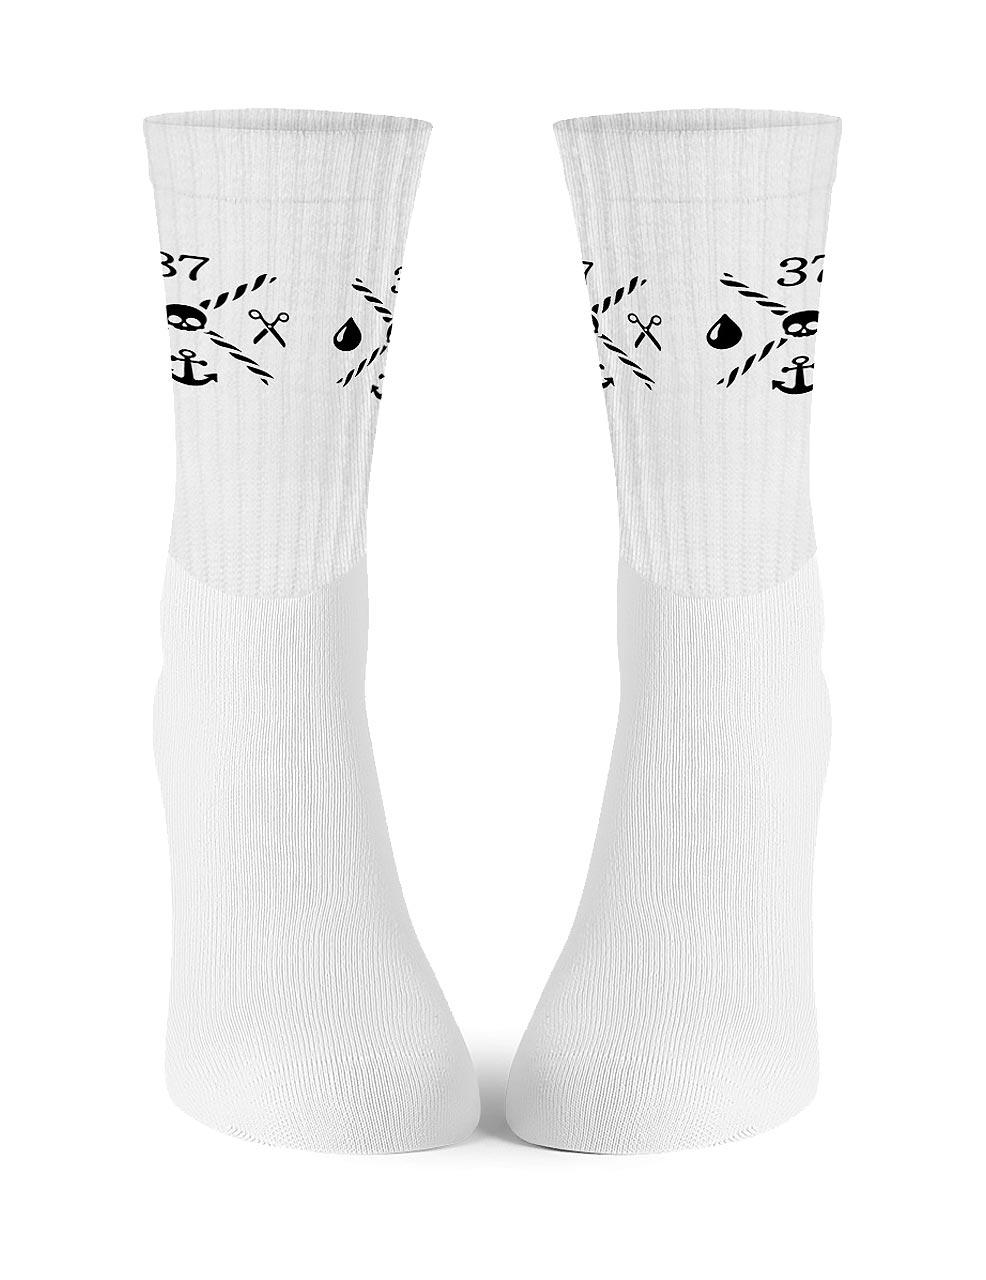 THE QUARTER MASTERS socks in white with black logo